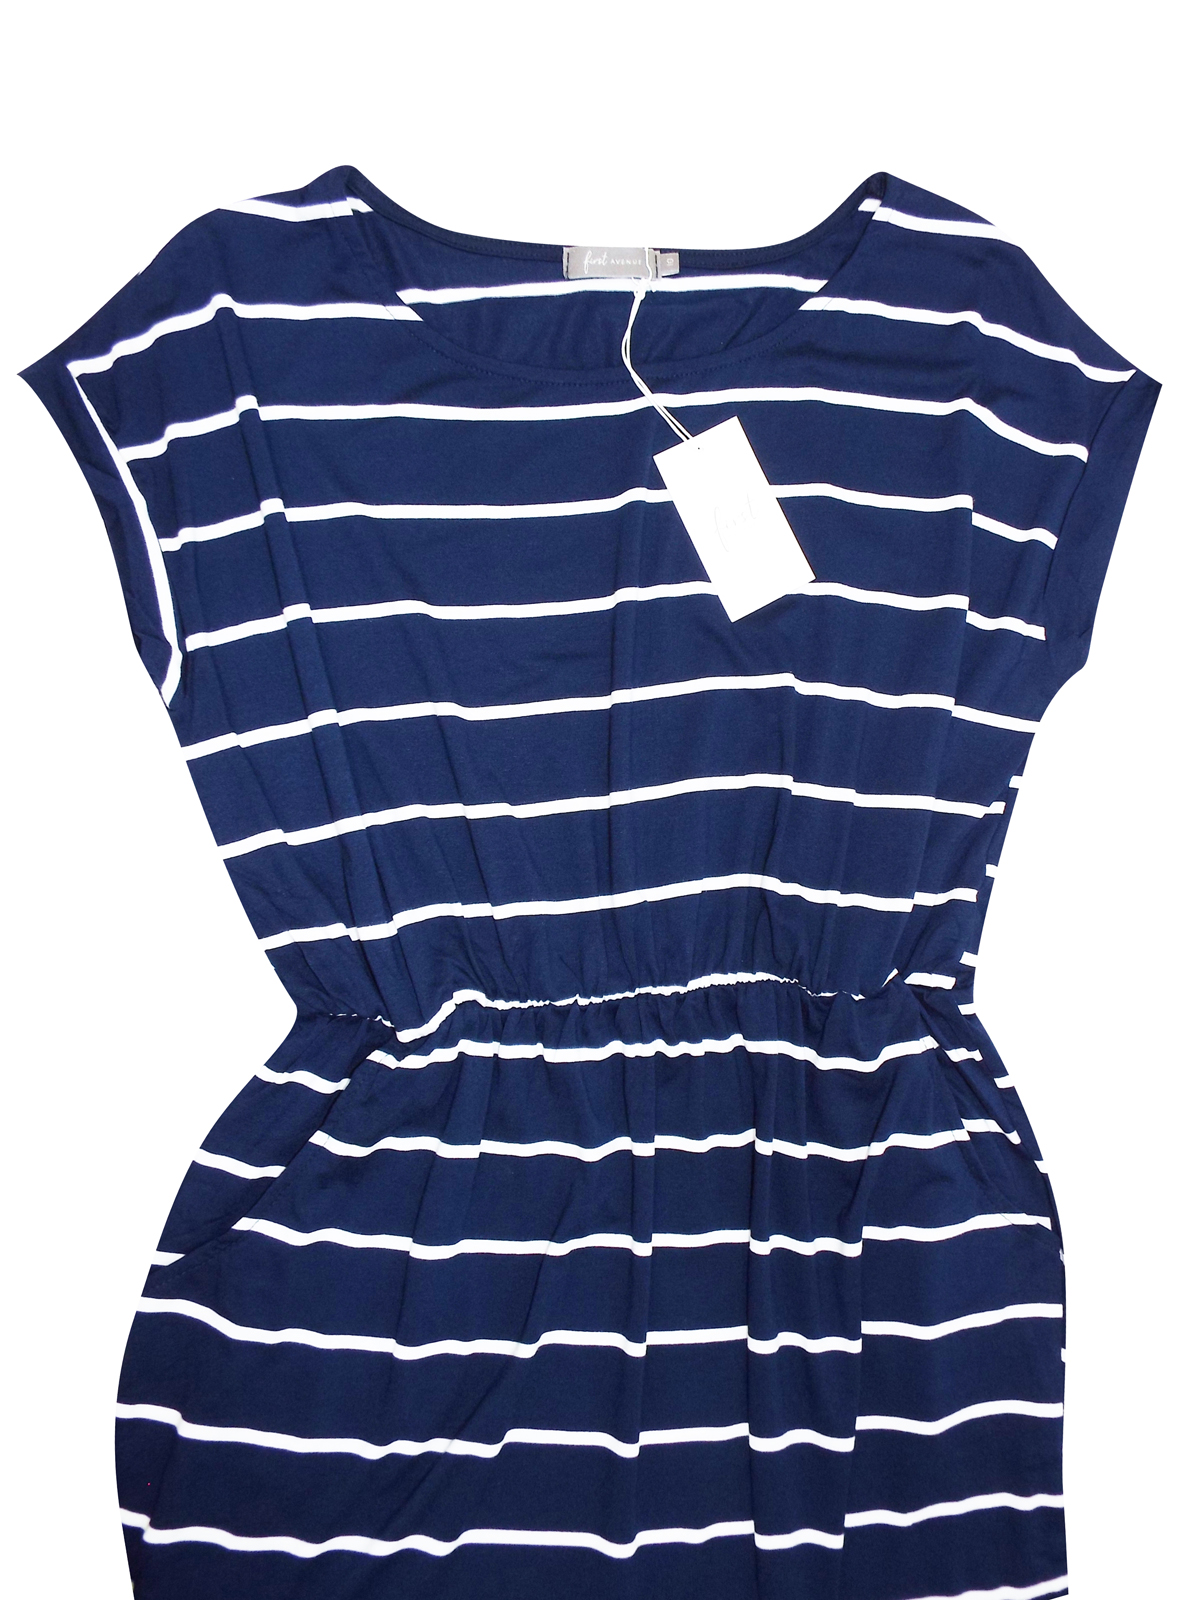 First Avenue NAVY Nautical Stripe Jersey Mini Dress - Size 10 to 20